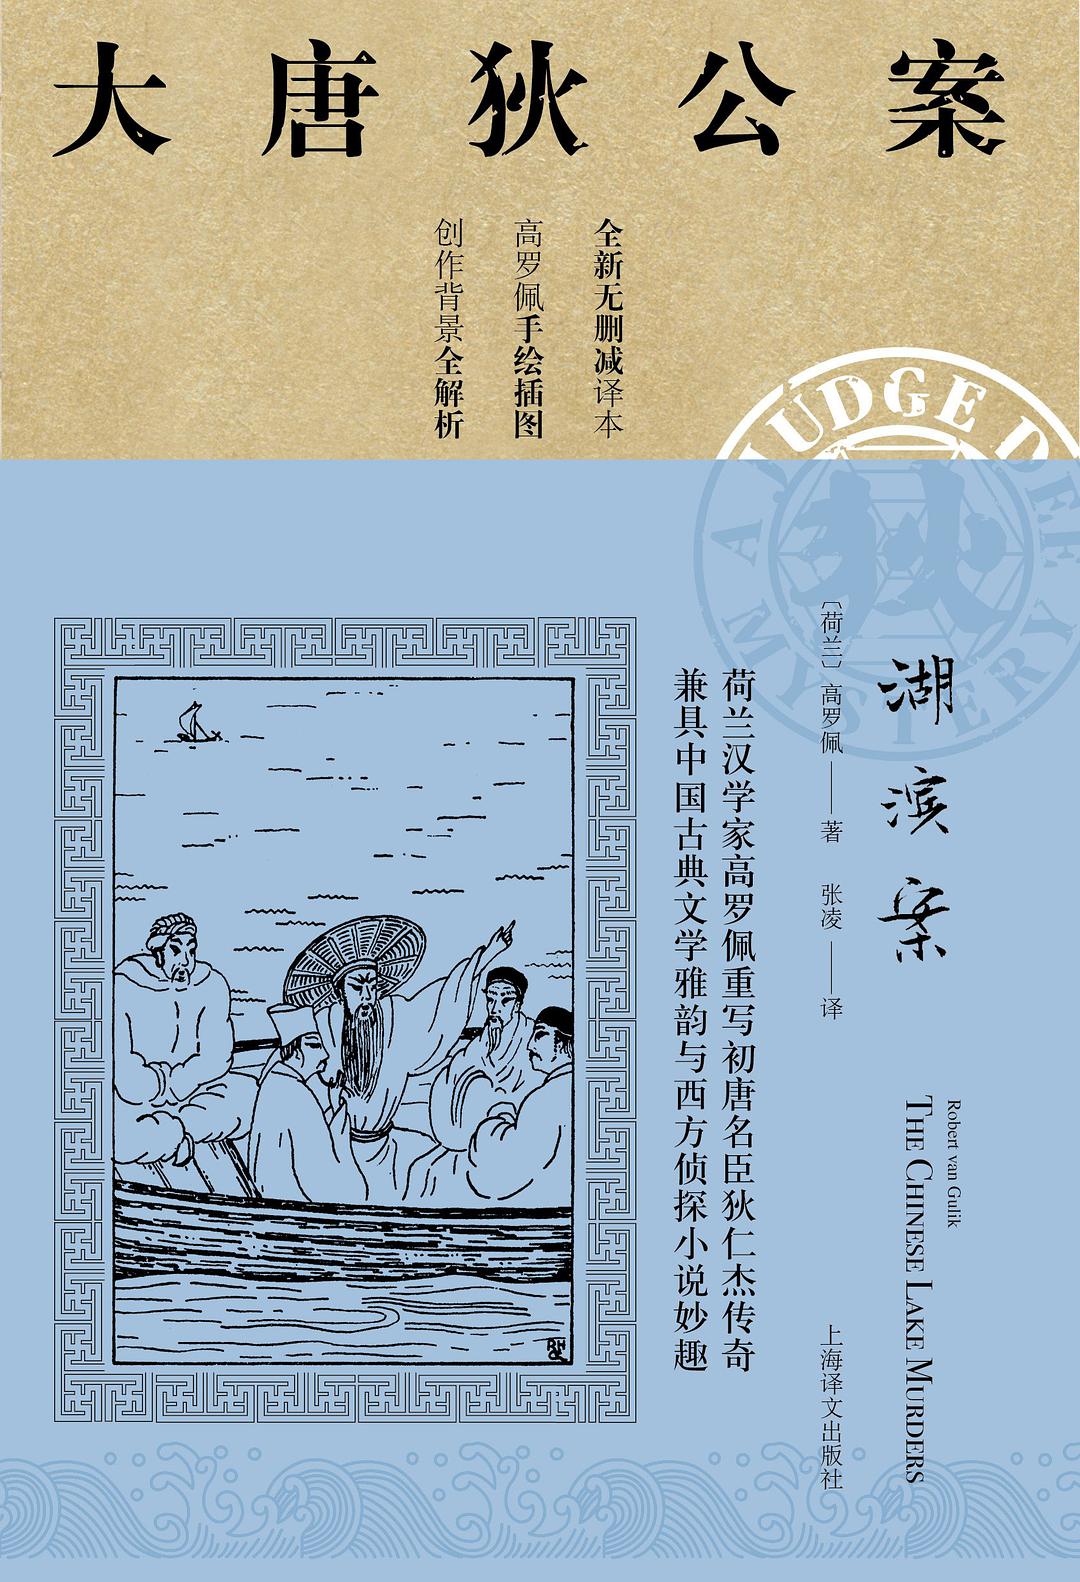 Robert van Gulik: 湖滨案 (Chinese language, 2019, 上海译文出版社)